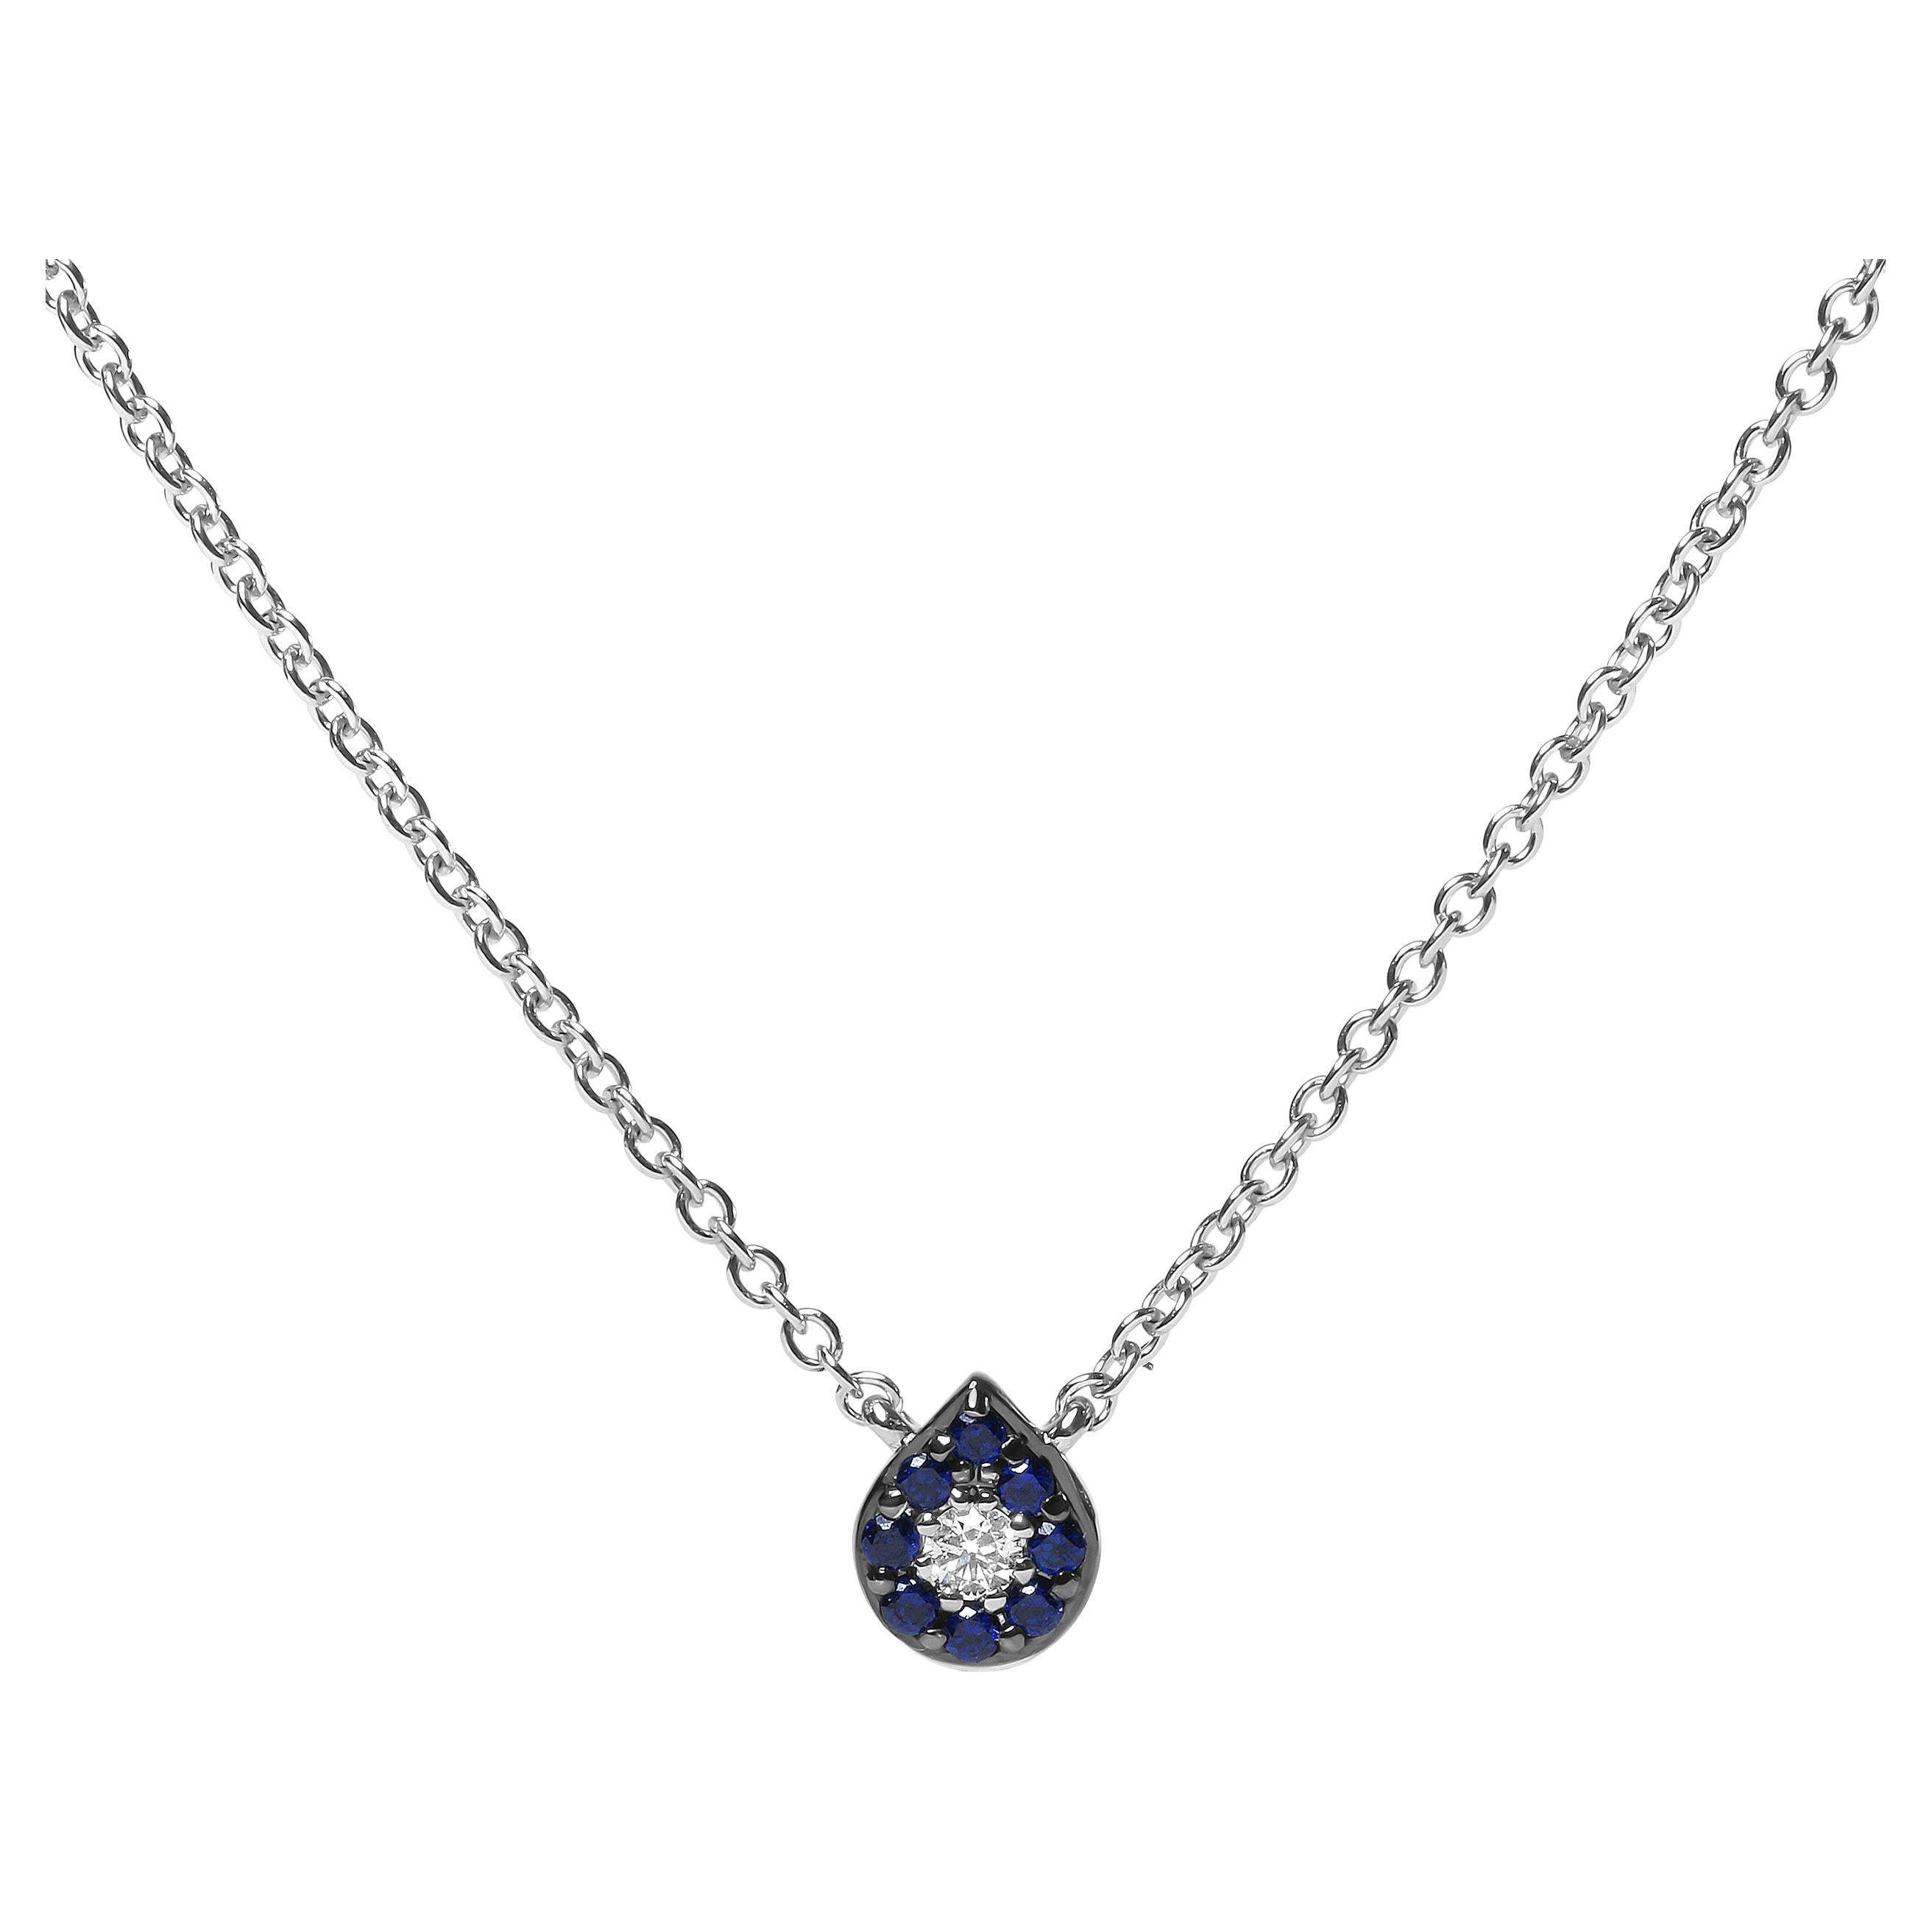 18K White Gold Diamond Accent & Blue Sapphire Gemstone Halo Pendant Necklace